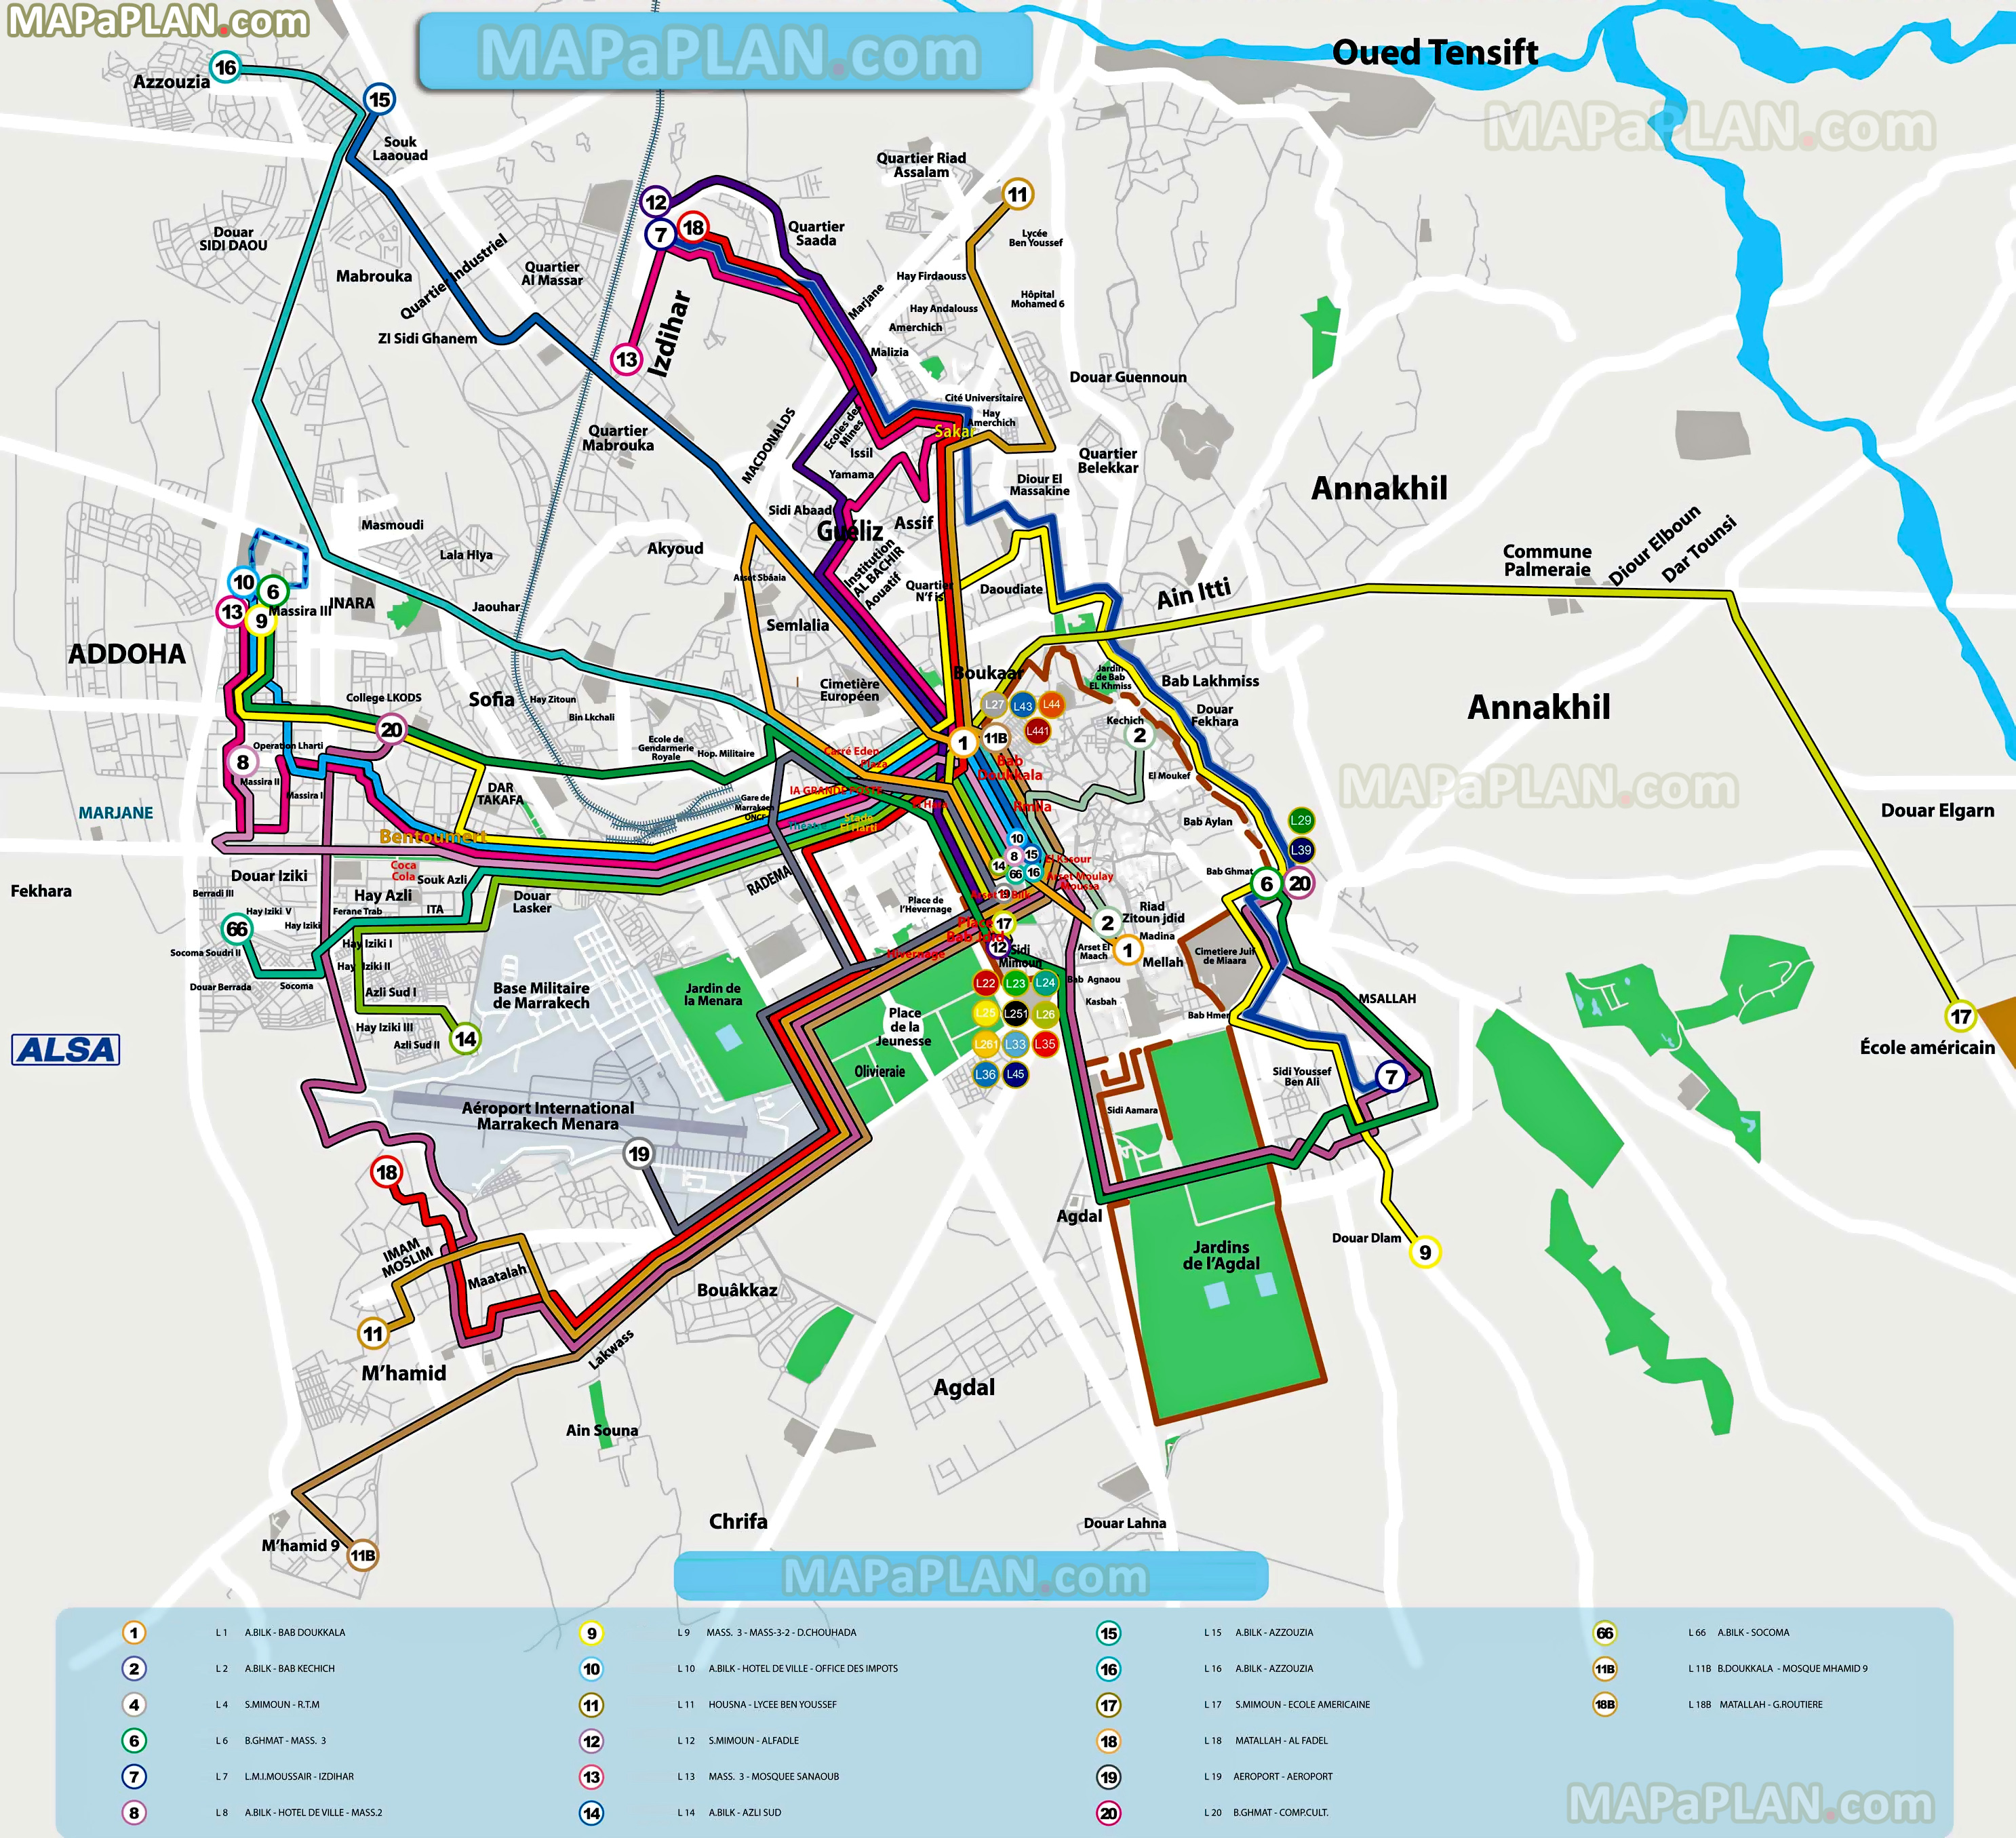 local bus routes lines stops public transport alsa network system menara airport railway Marrakech top tourist attractions map